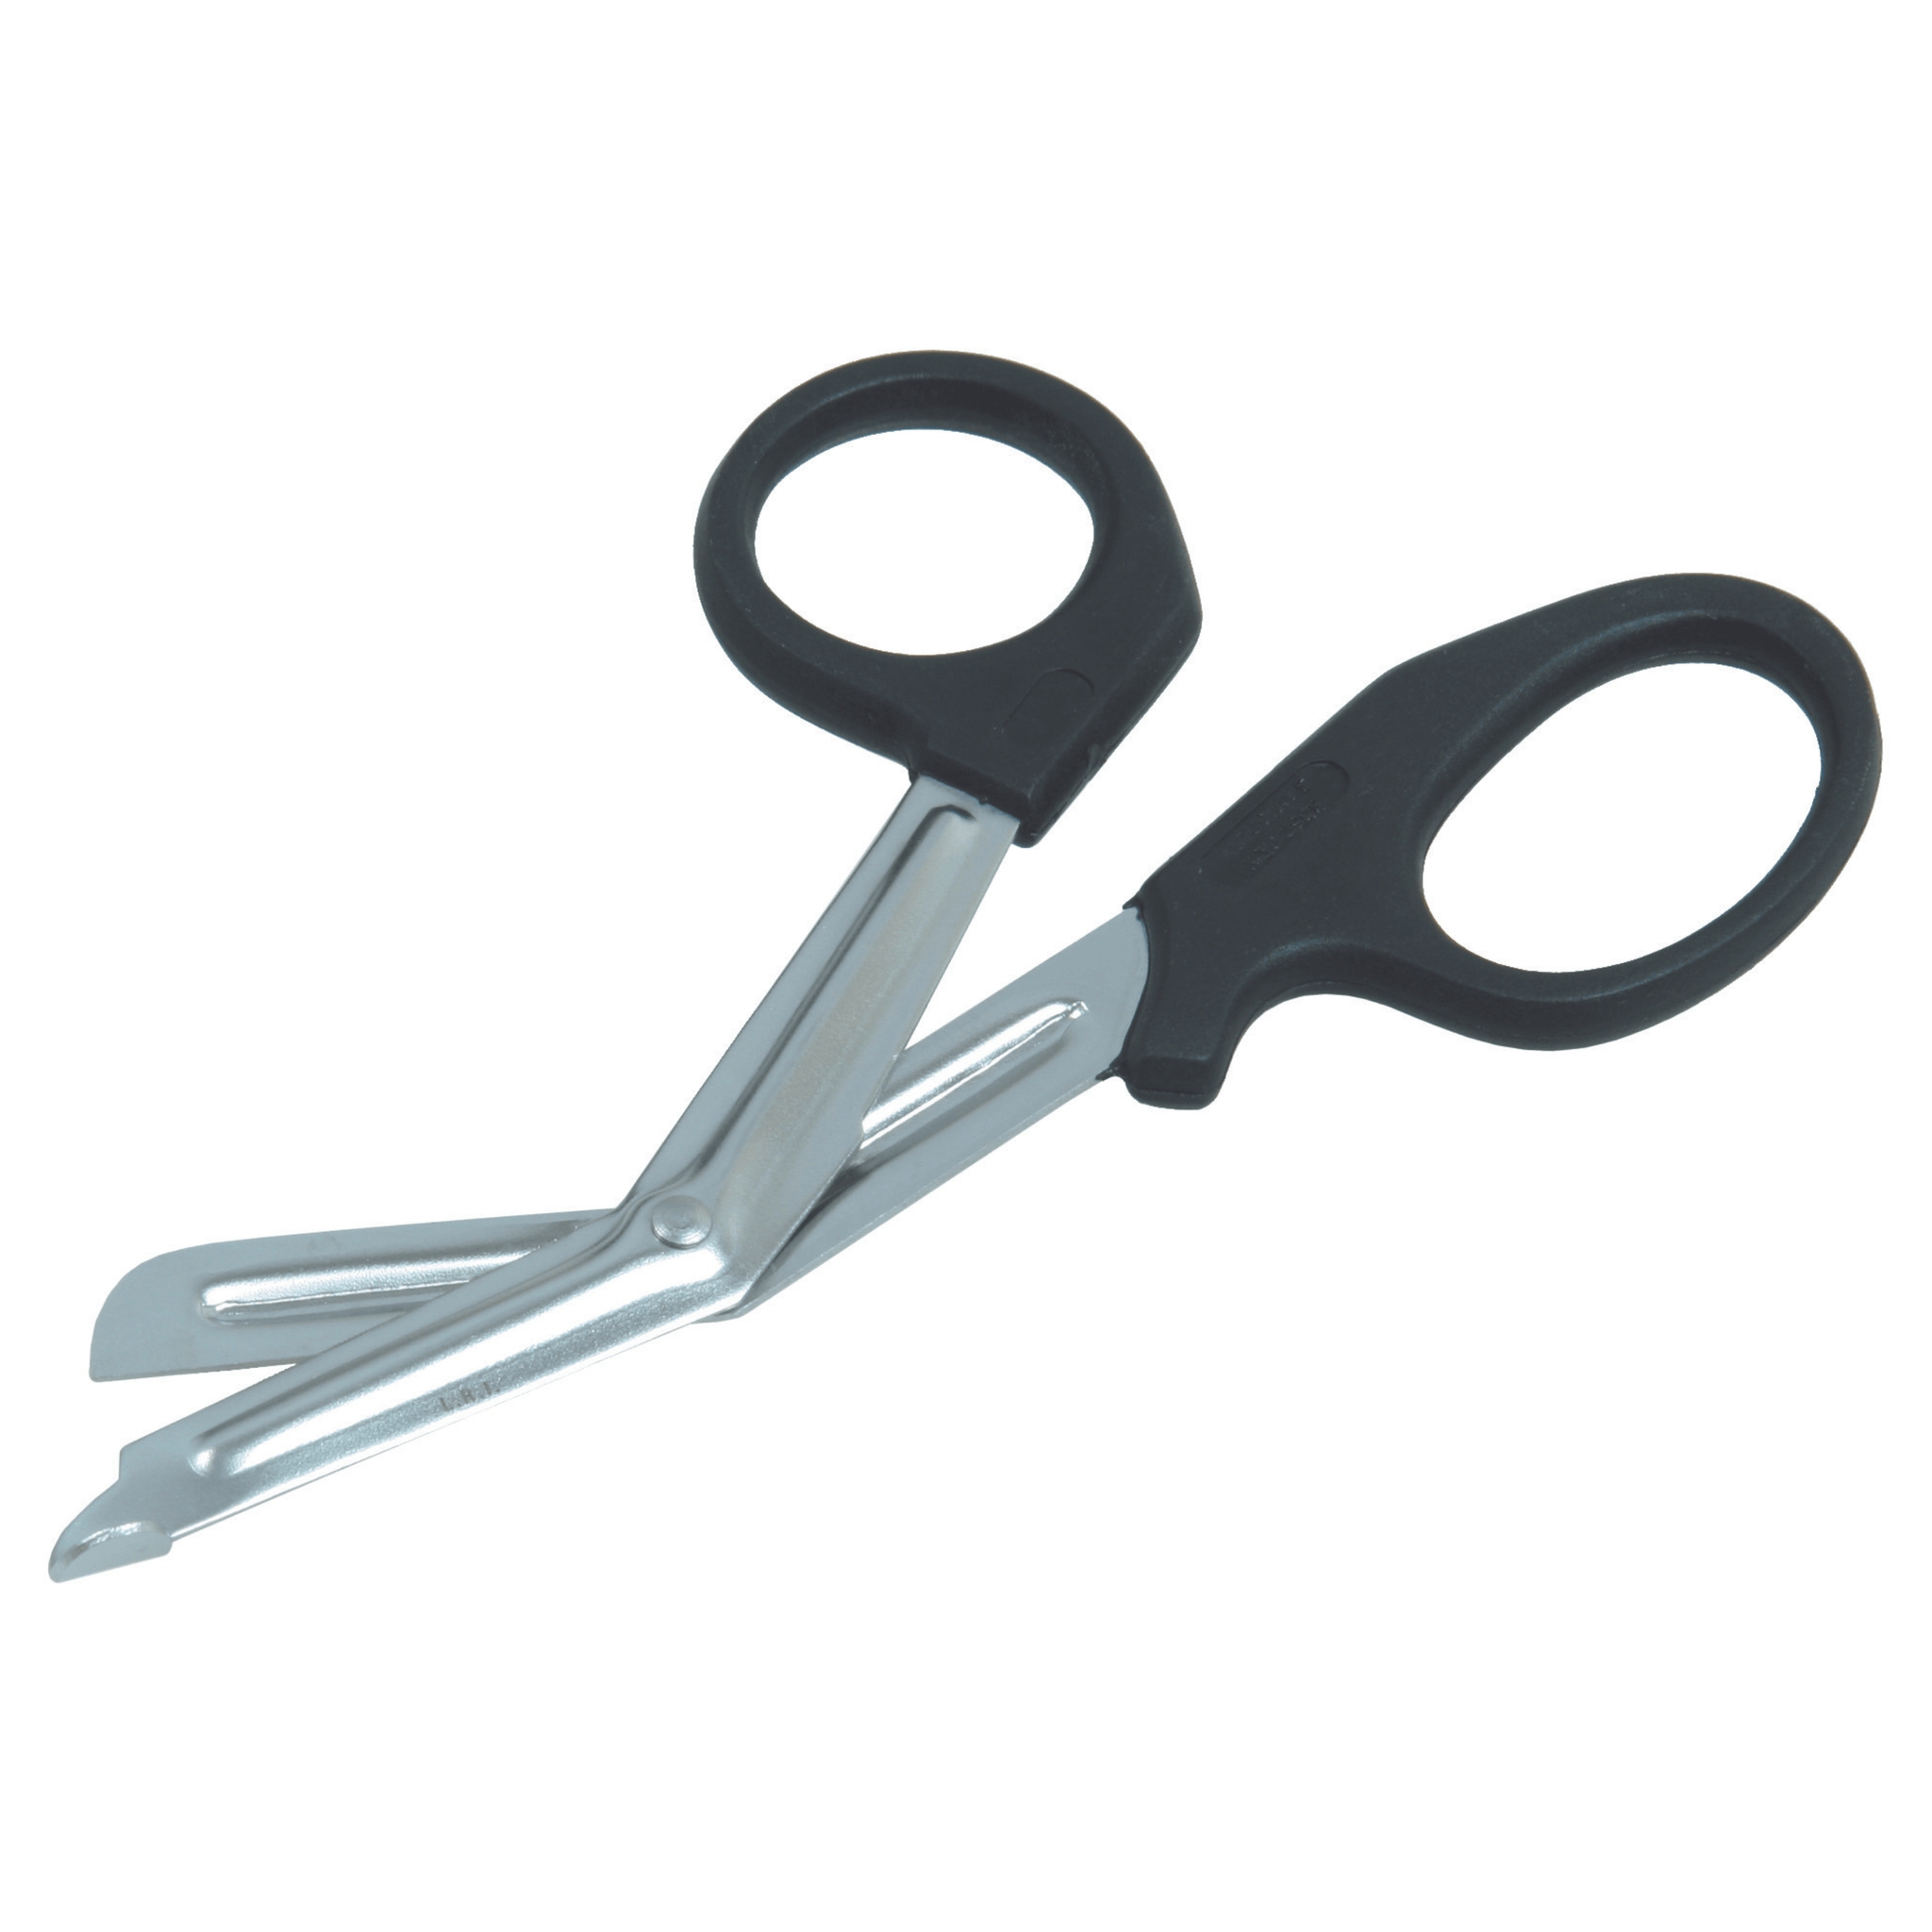 Universal Scissors- Black, 18 cm